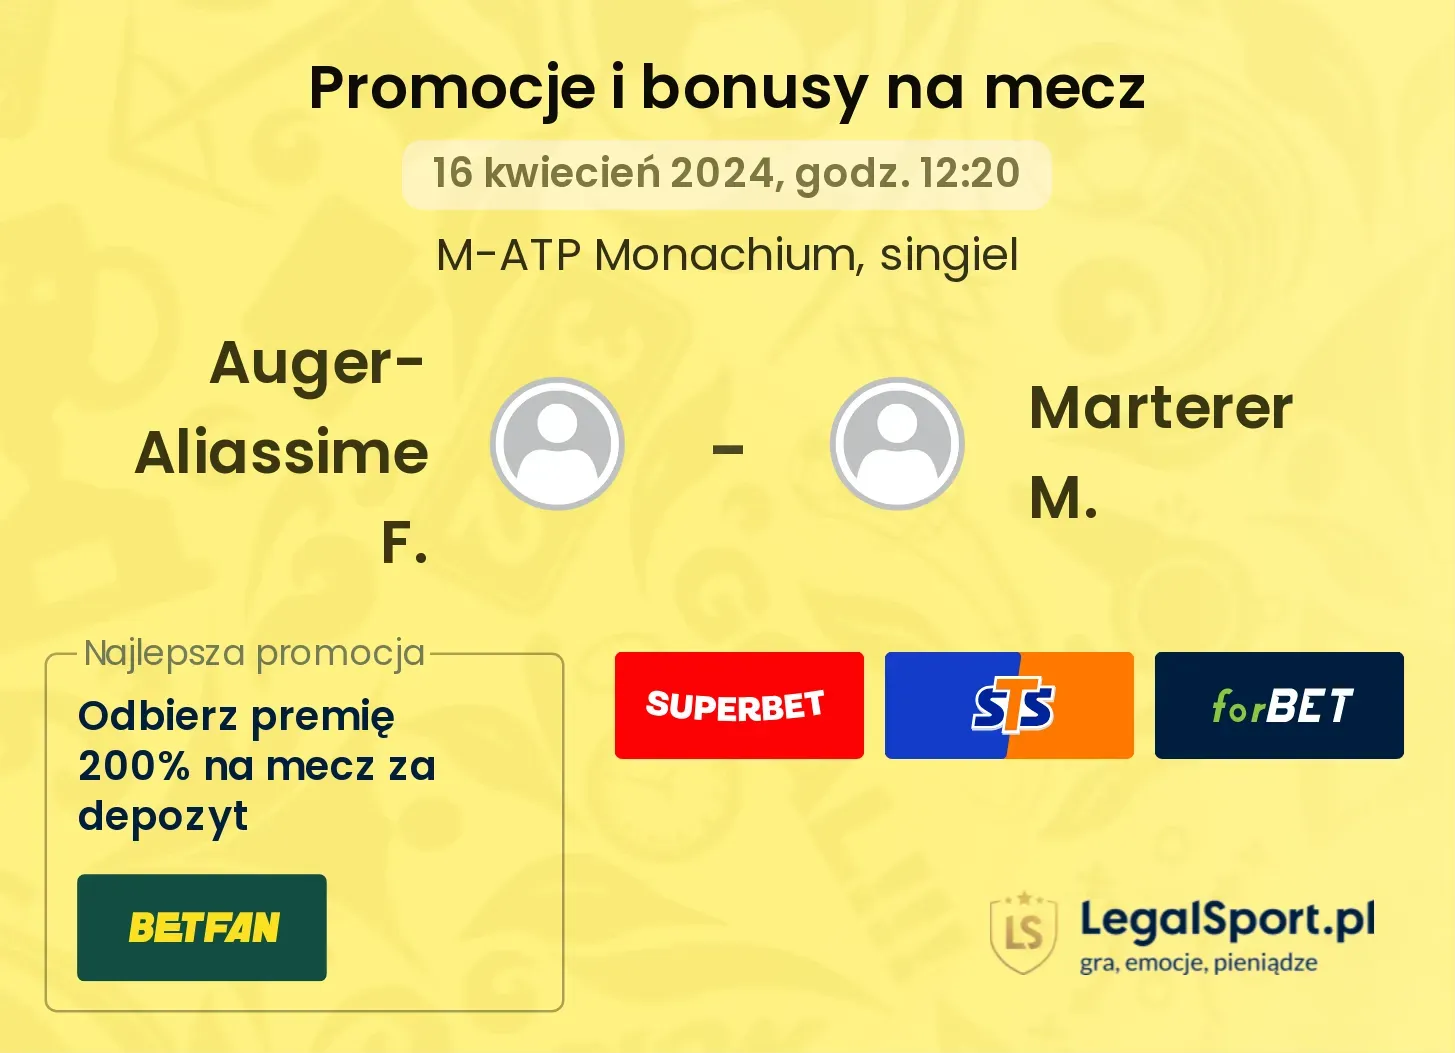 Auger-Aliassime F. - Marterer M. promocje bonusy na mecz